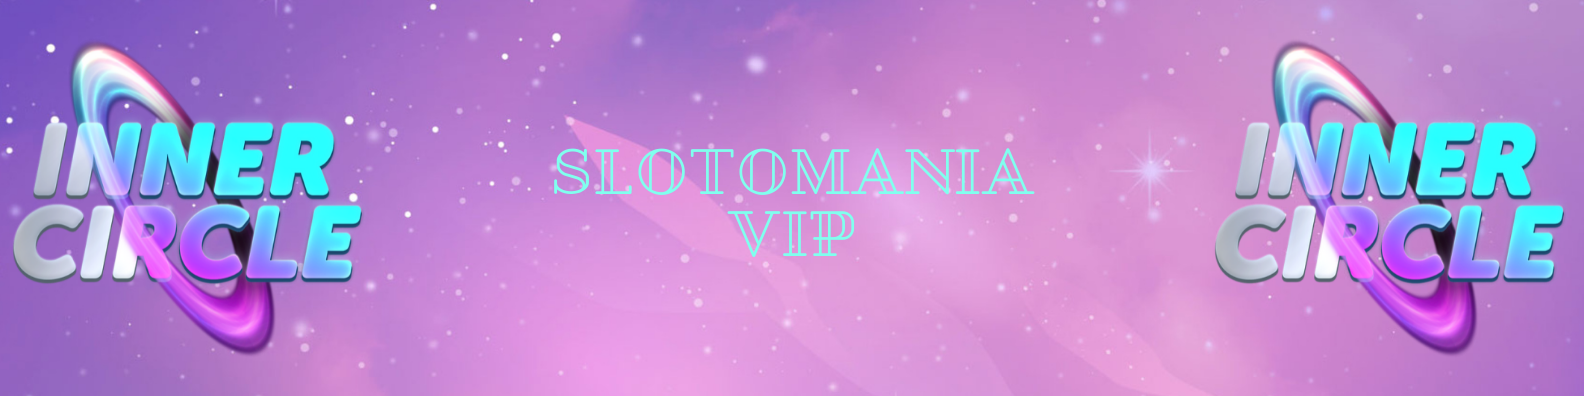 Slotomania VIP Inner Circle